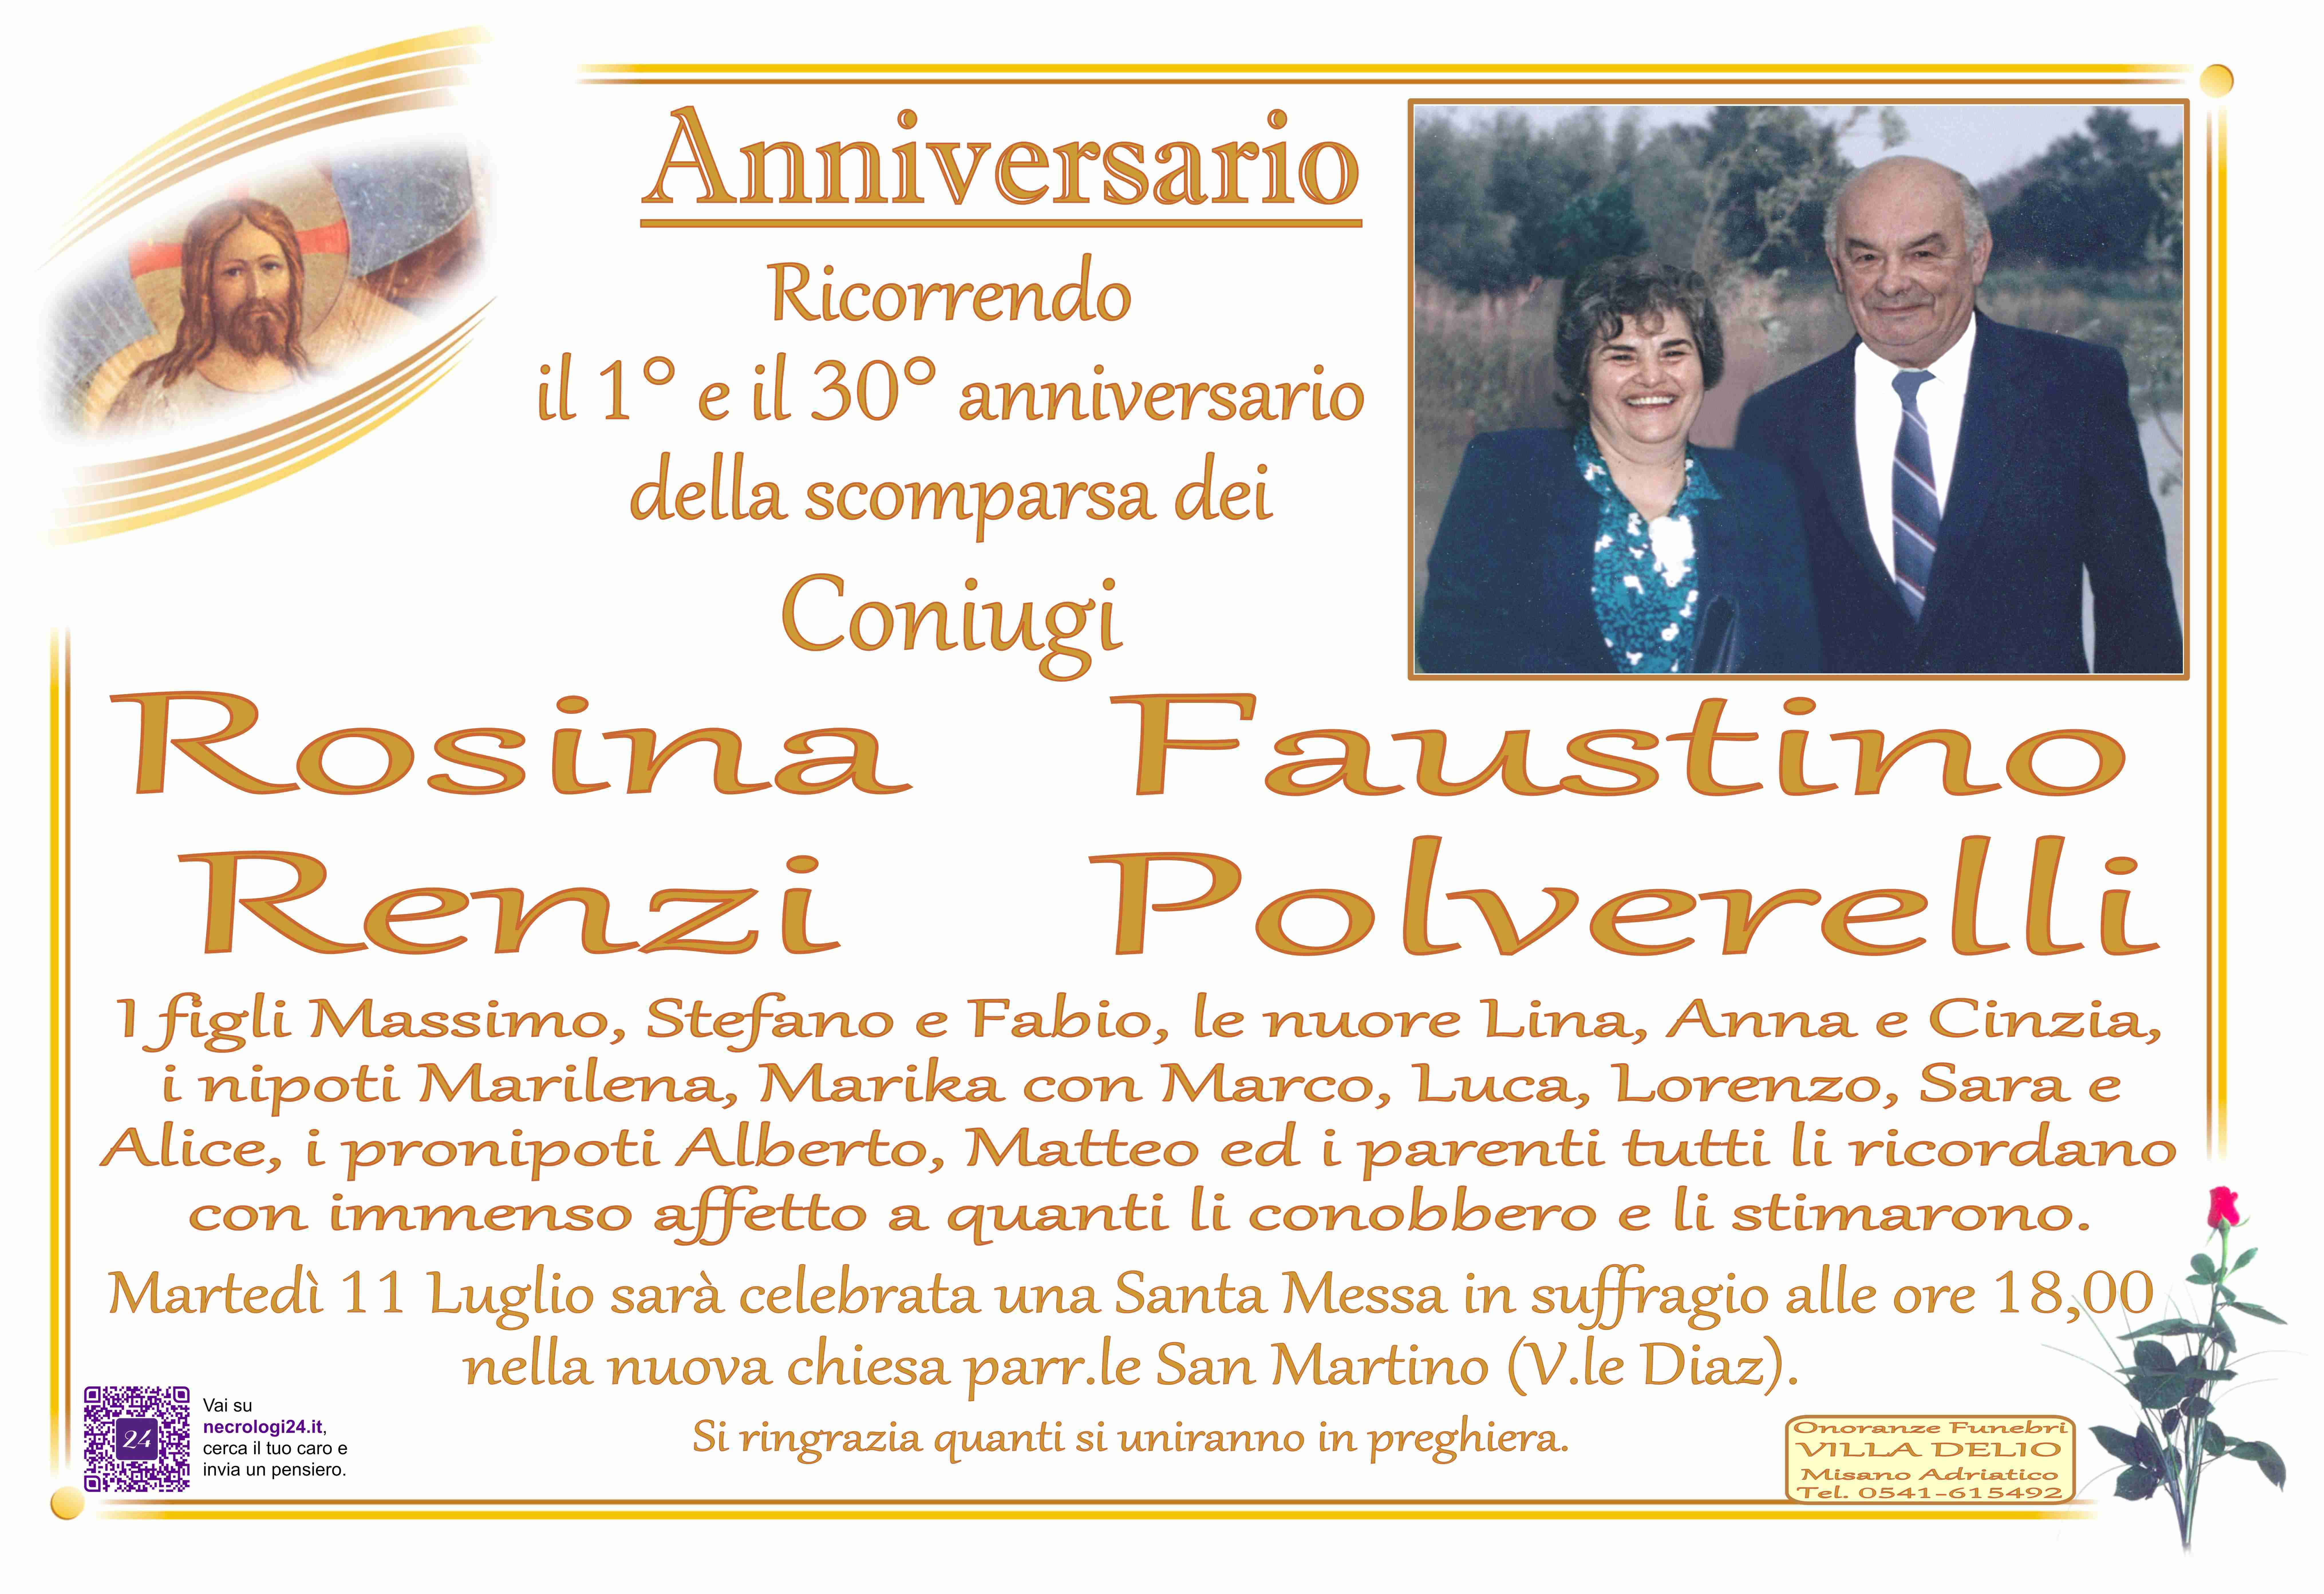 Rosina Renzi e Faustino Polverelli